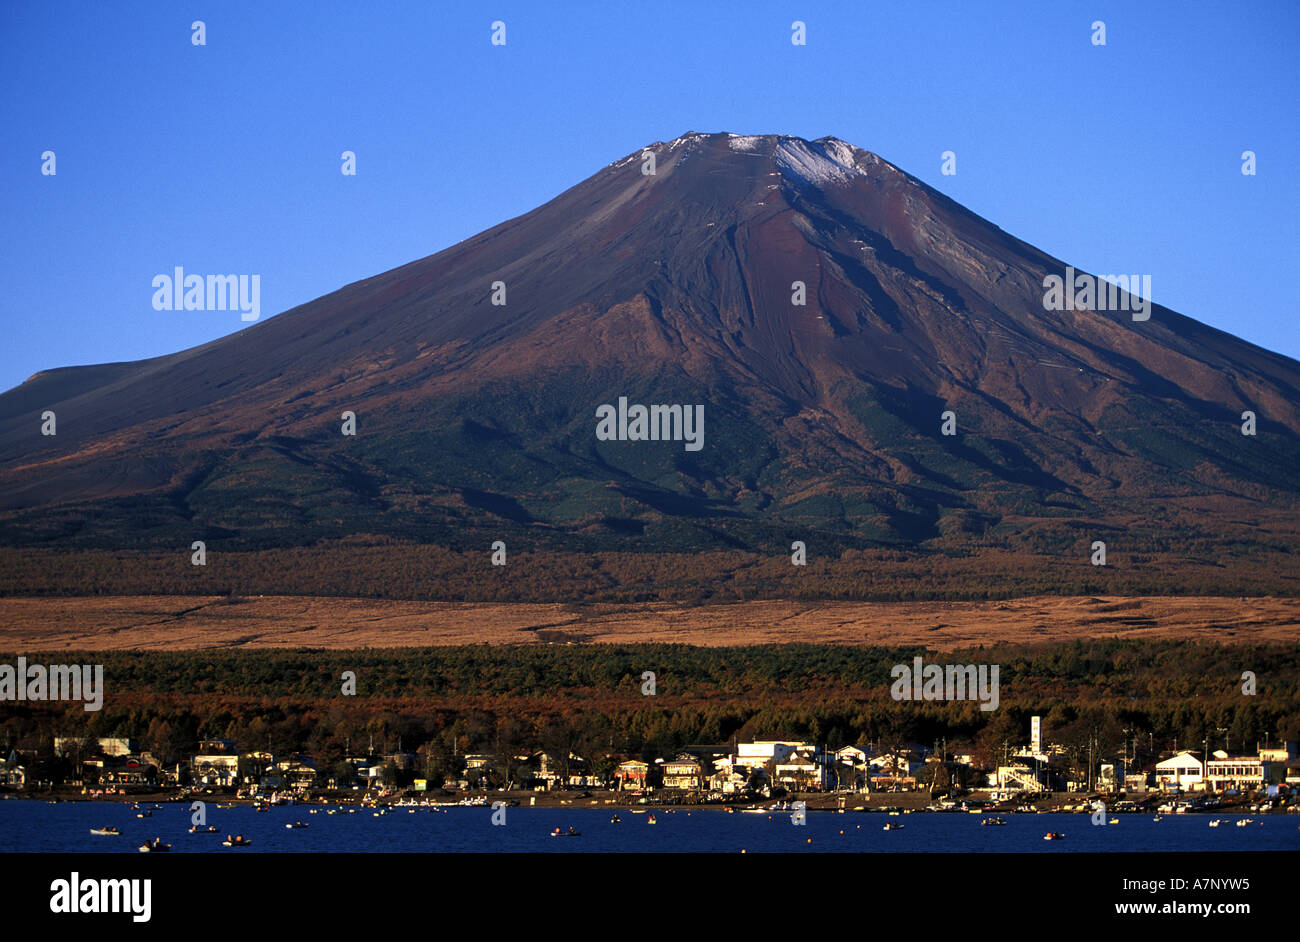 Japan, Honshu Island, Chubu region, the Mount Fuji (12 388, 45 ft) in front of Lake Yamanako and Kawagushi village Stock Photo